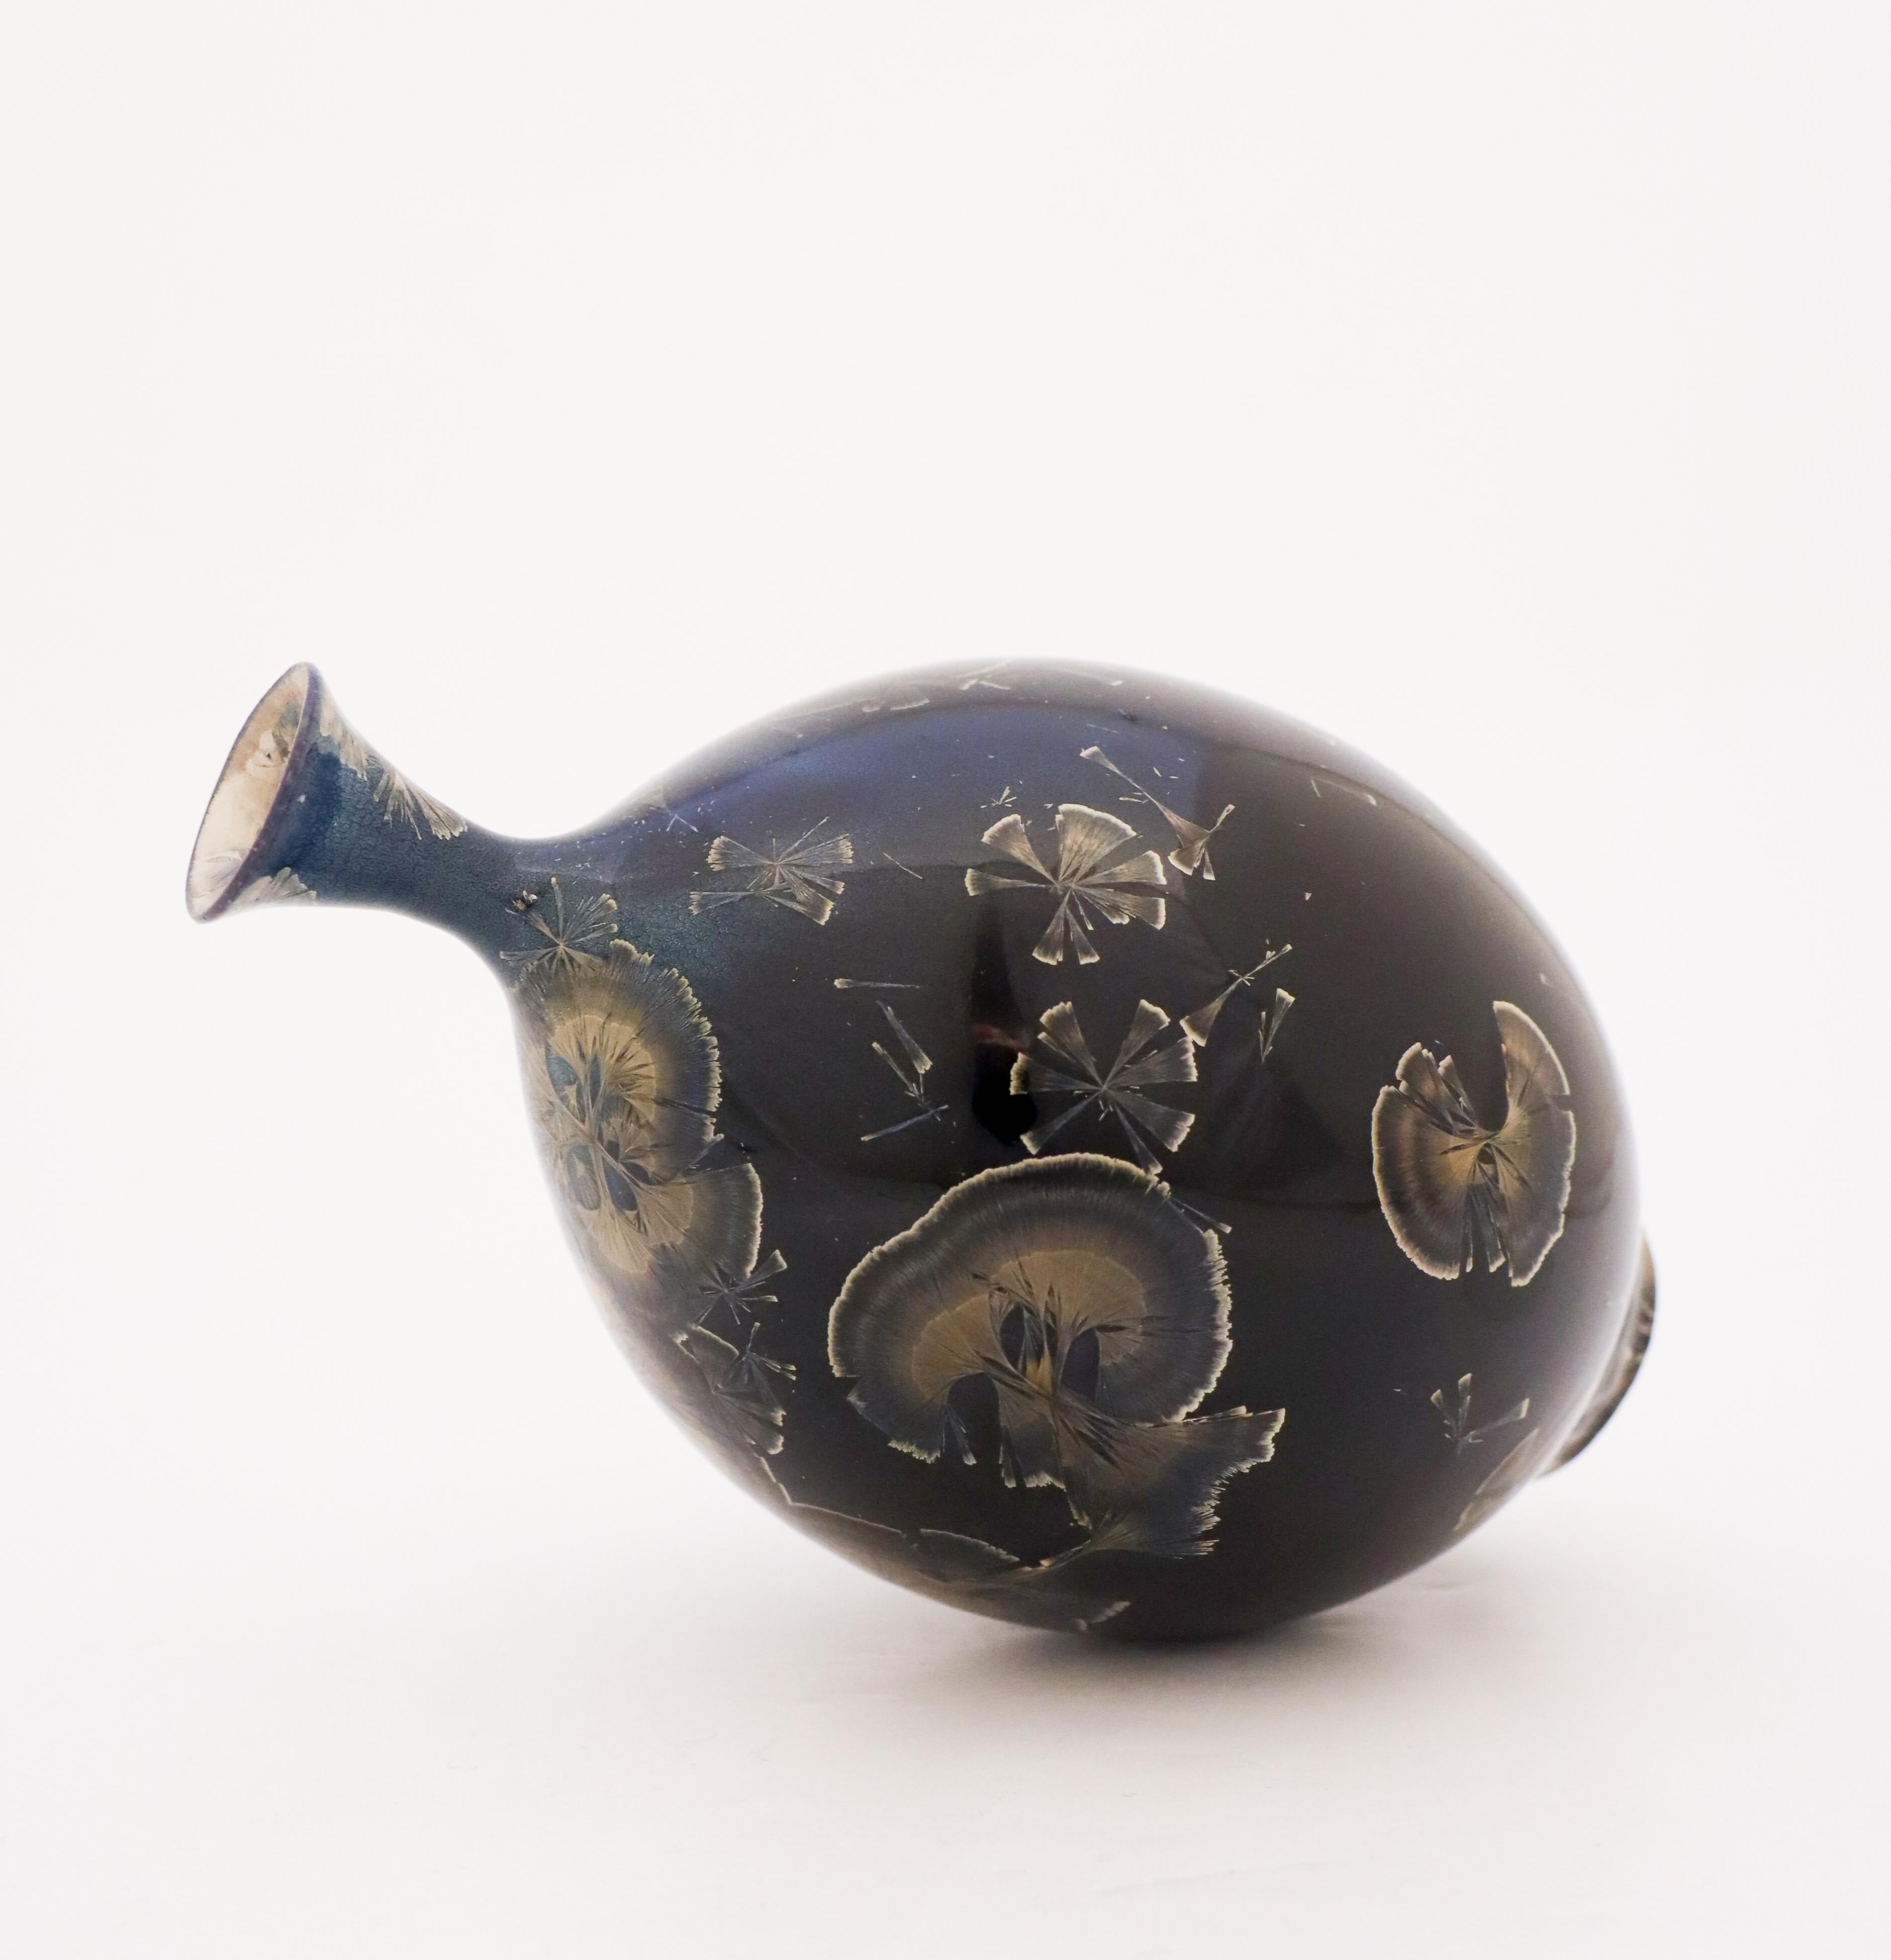 Isak Isaksson, Vase with Crystalline Glaze, Contemporary Swedish Ceramicist 3